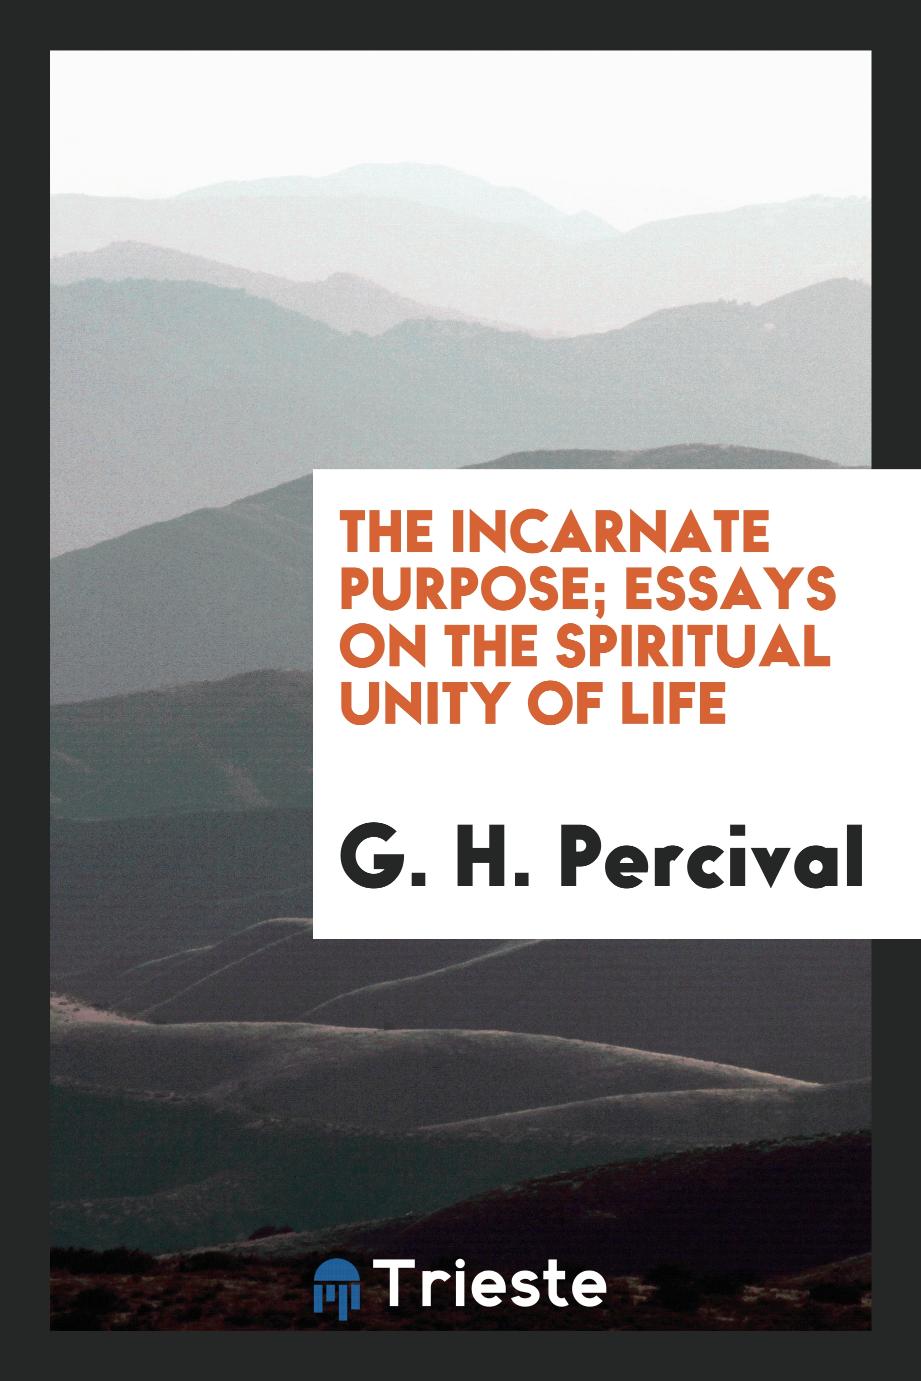 The incarnate purpose; essays on the spiritual unity of life